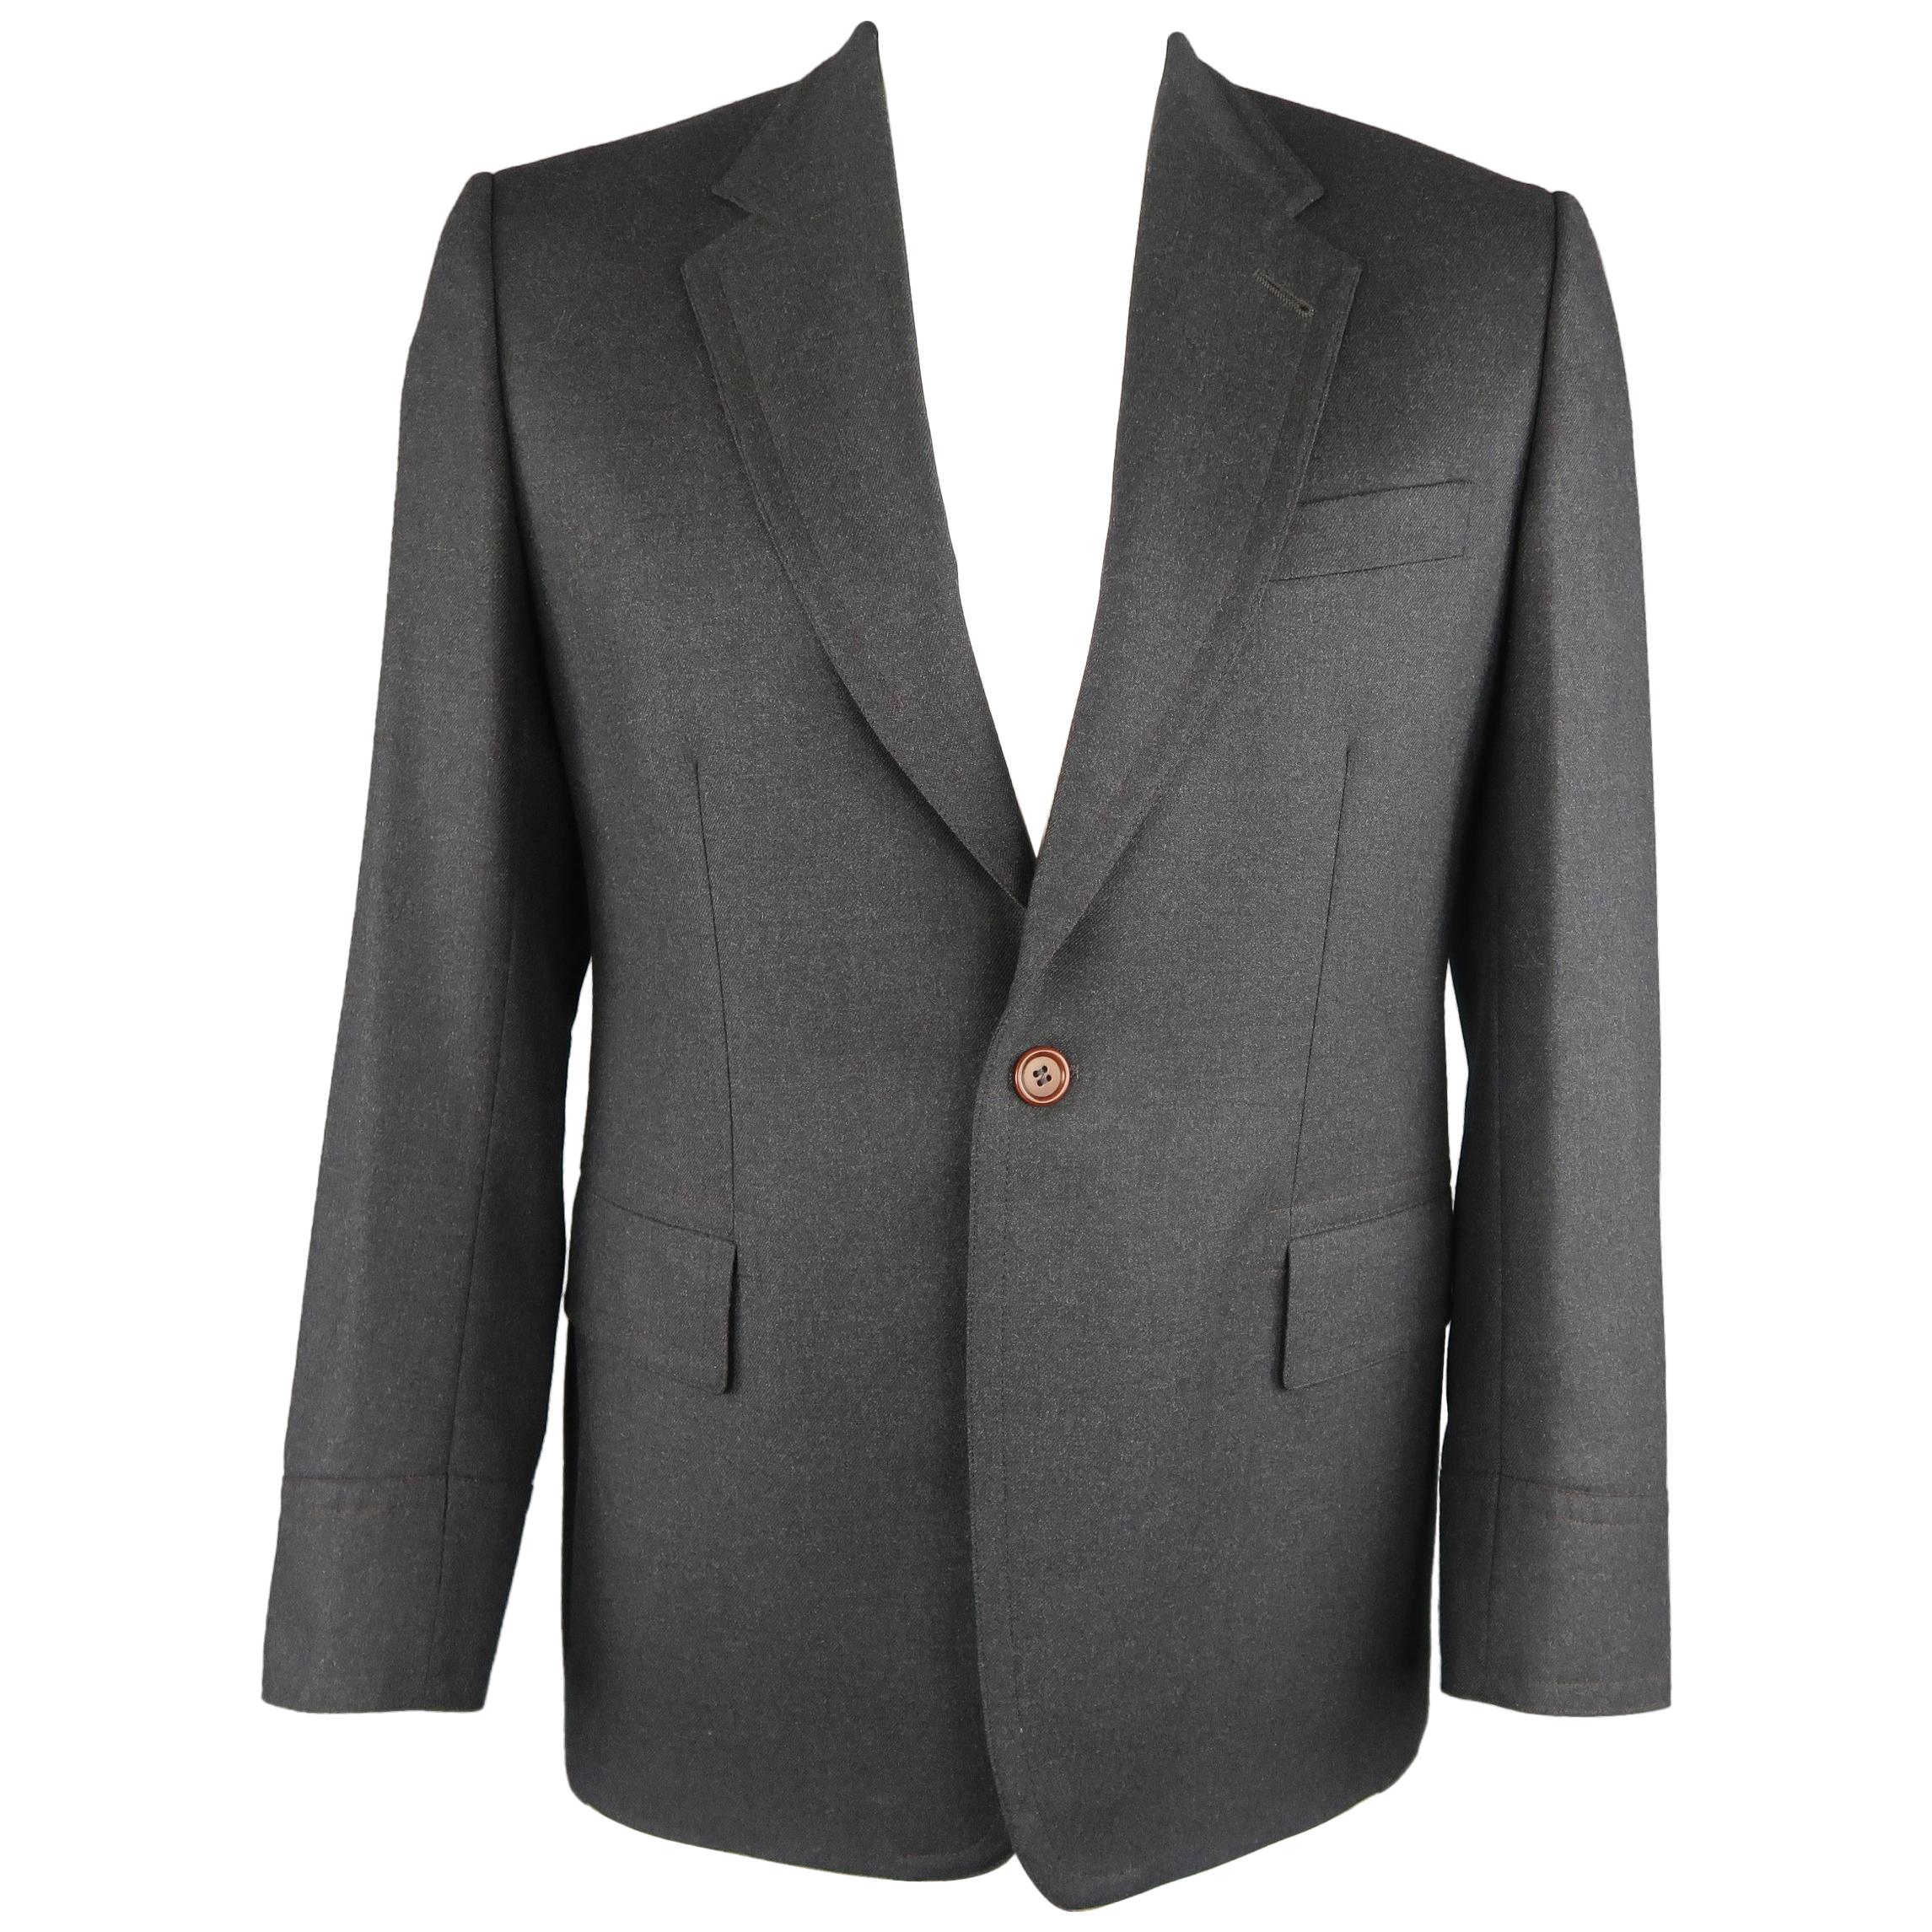 Men's PAUL SMITH 42 Long Charcoal Gray Wool SIngle Button Notch Lapel Sport Coat